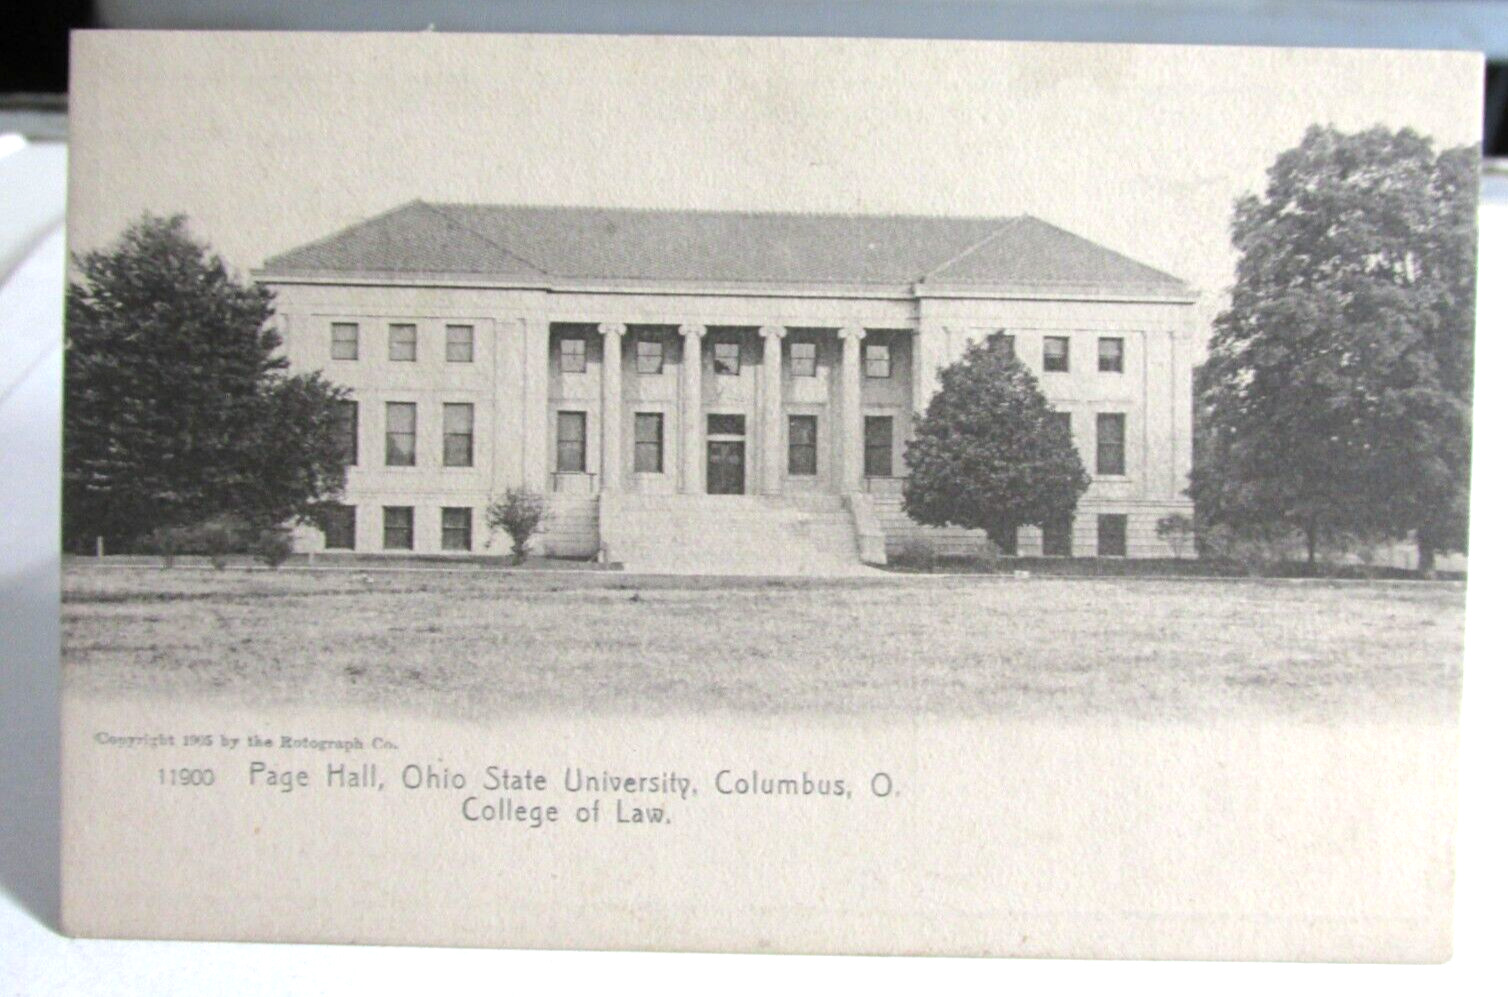 1908-1912 OHIO STATE UNIVERSITY COLUMBUS OHIO Postcard Page Hall College of Law